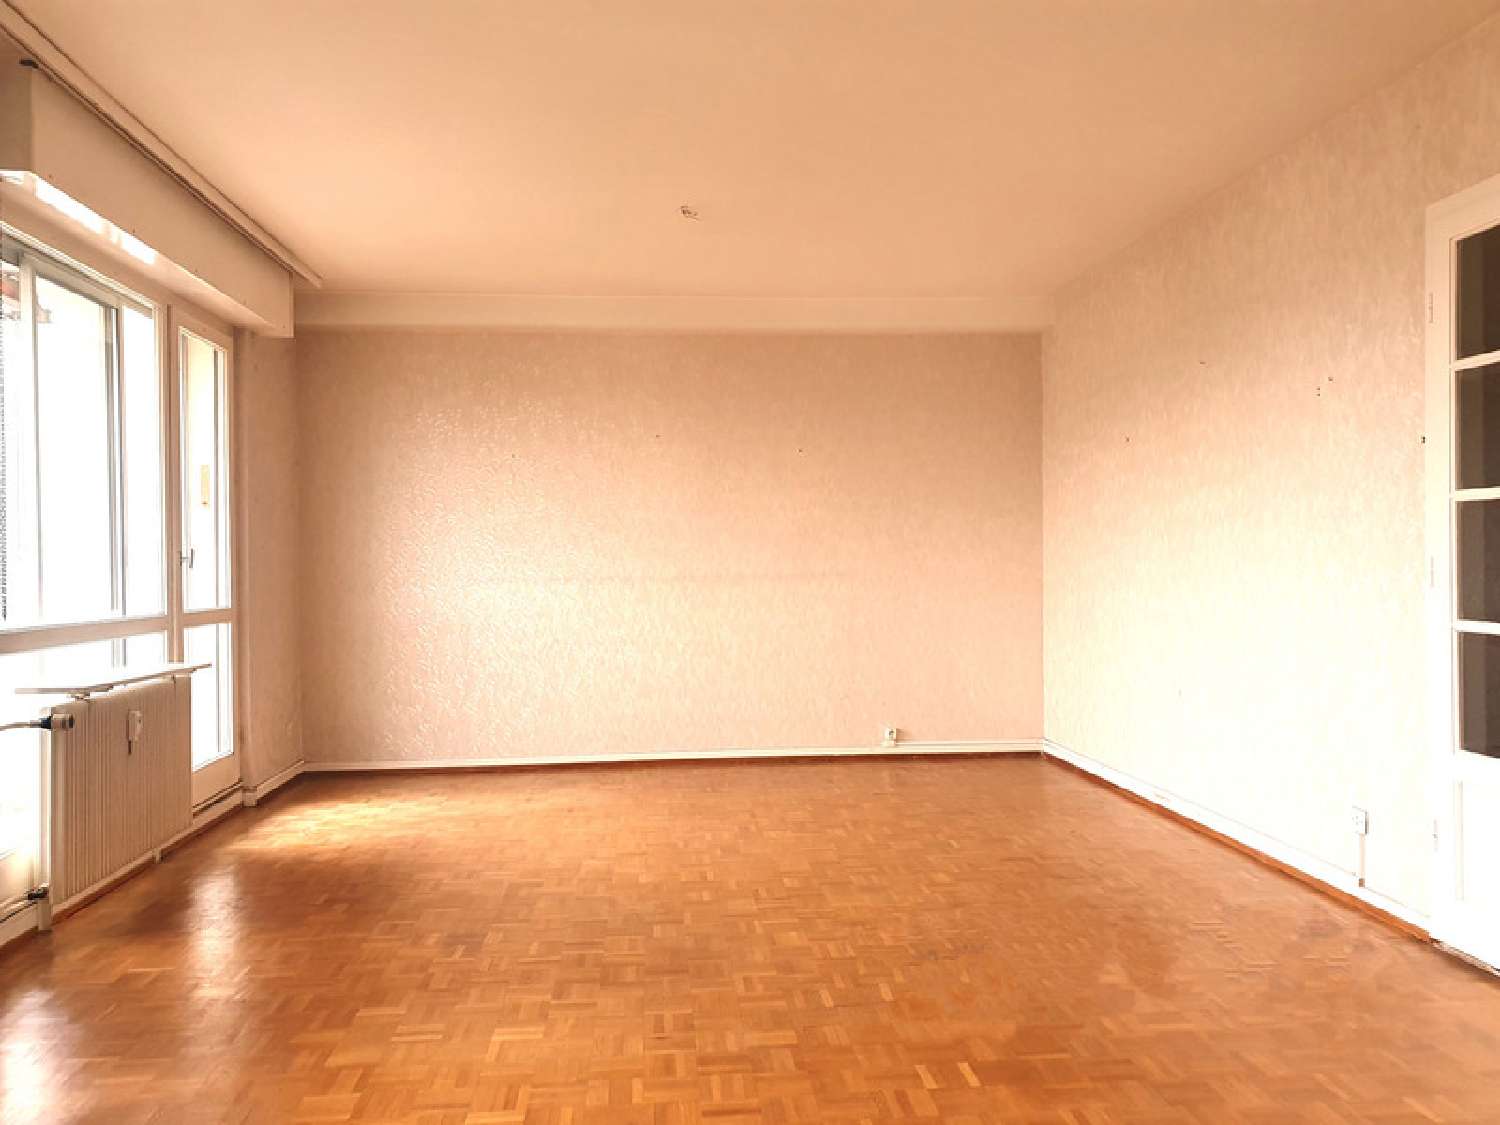  à vendre appartement Lingolsheim Bas-Rhin 3